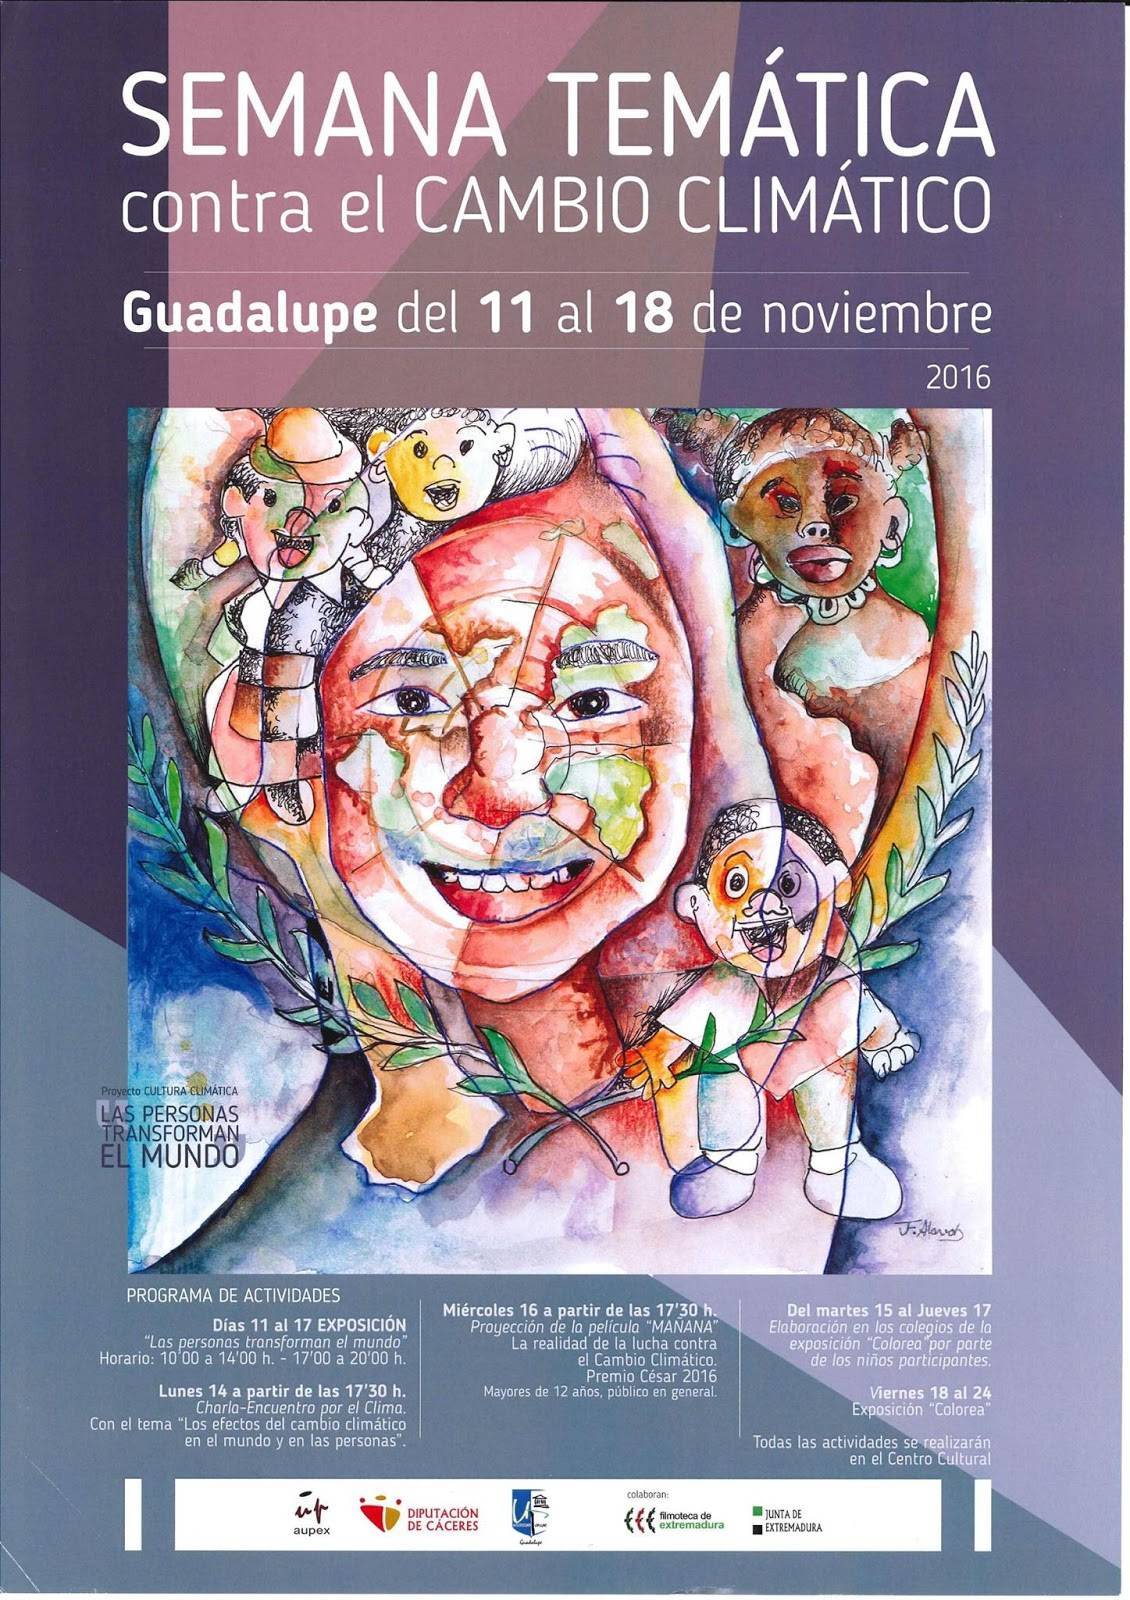 Semana temática contra el cambio climático 2016 - Guadalupe (Cáceres)